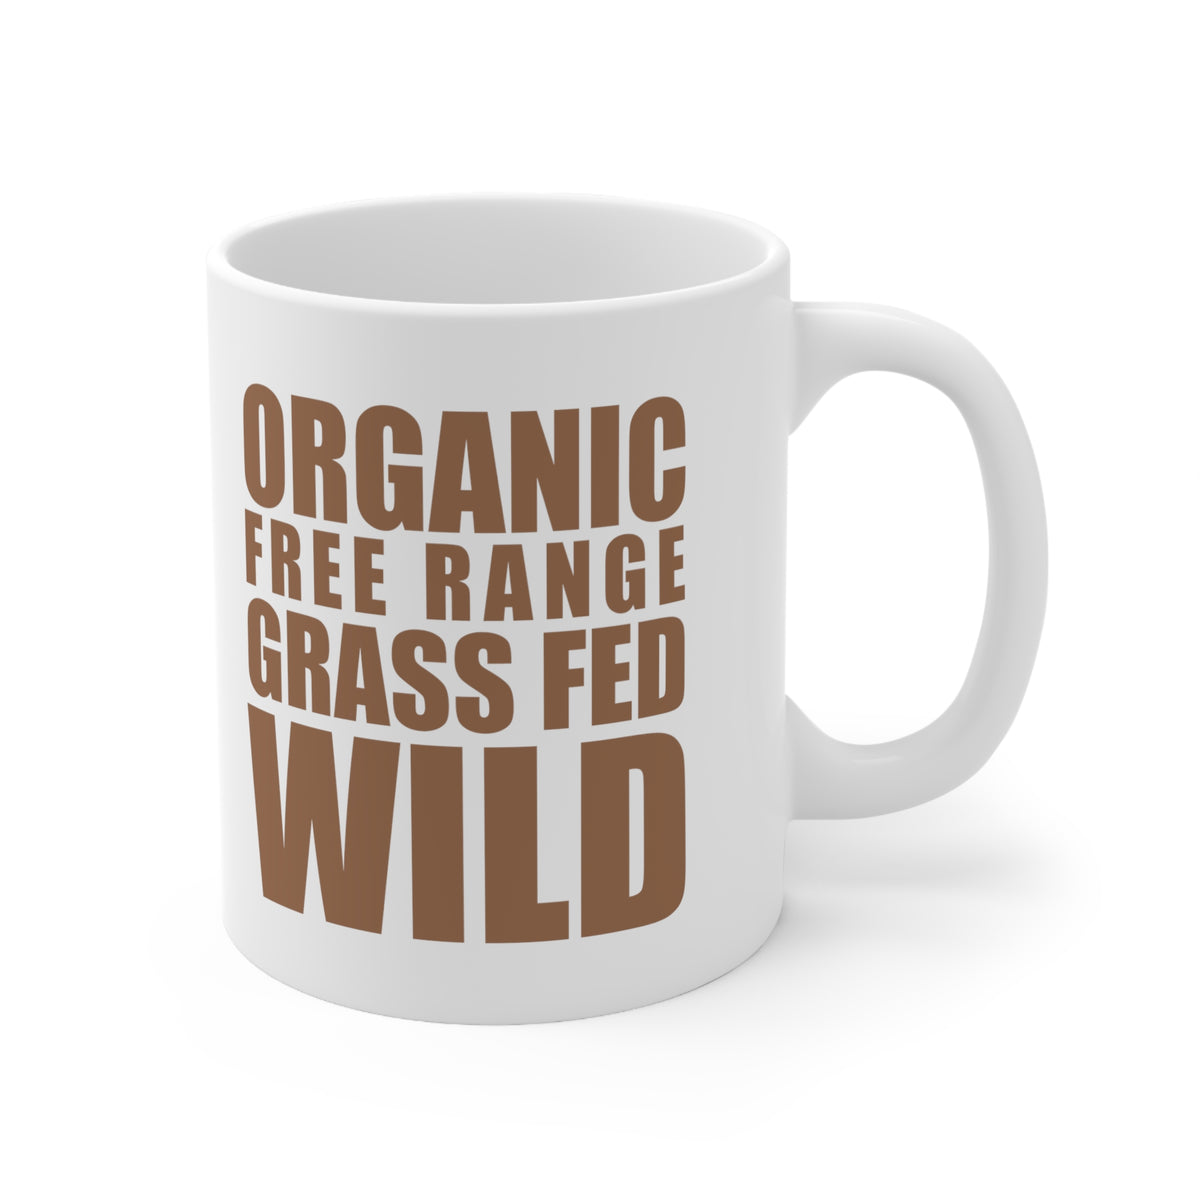 Organic, free range, grass fed & wild